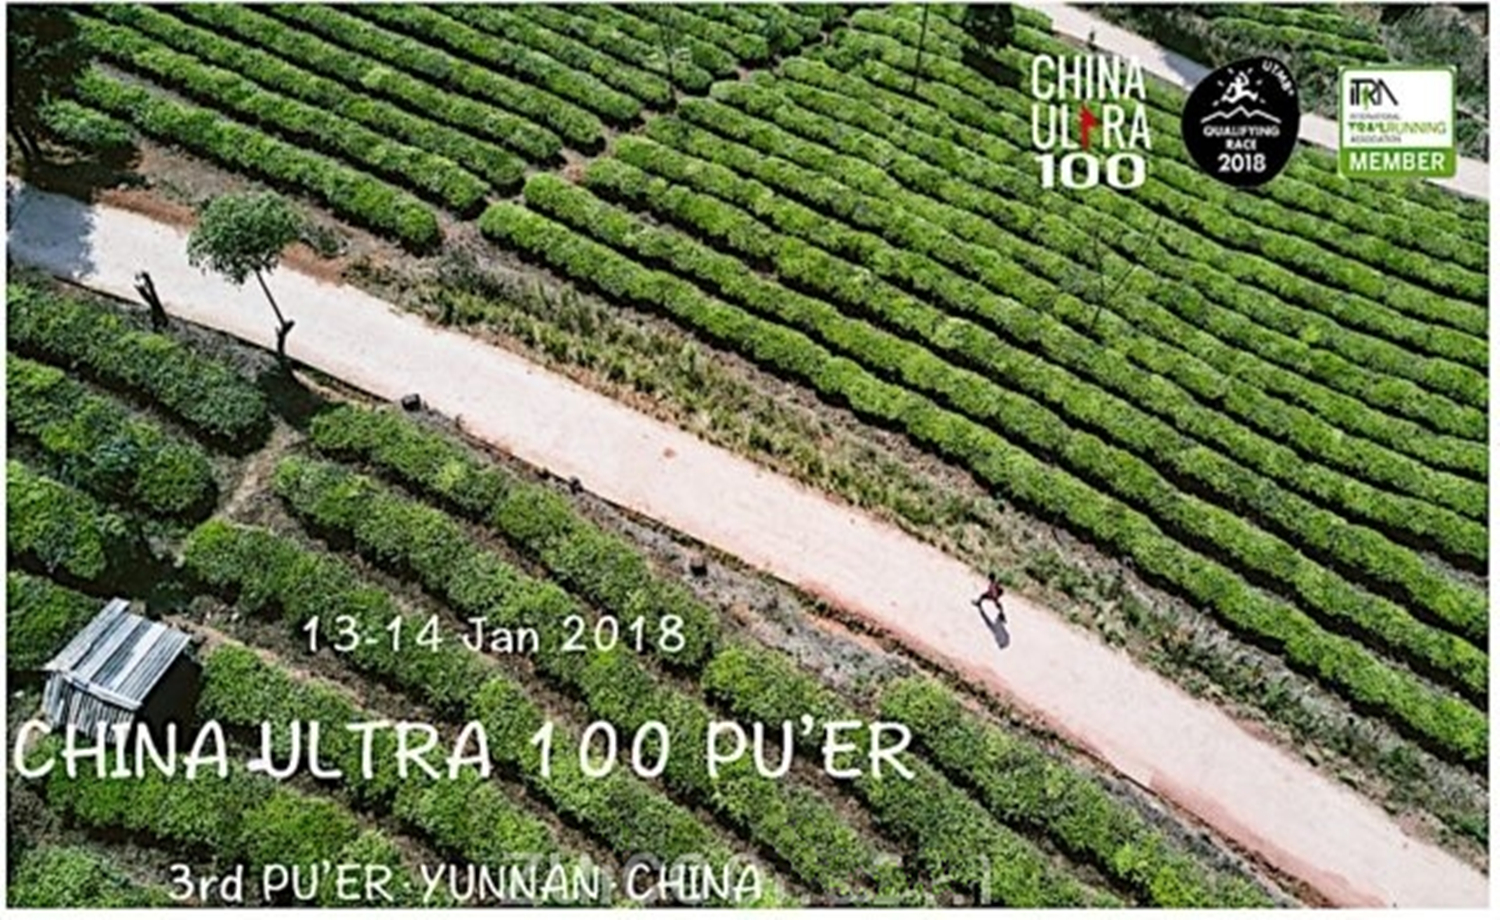 China Ultra 100 – PU’ER 2018（普洱100）